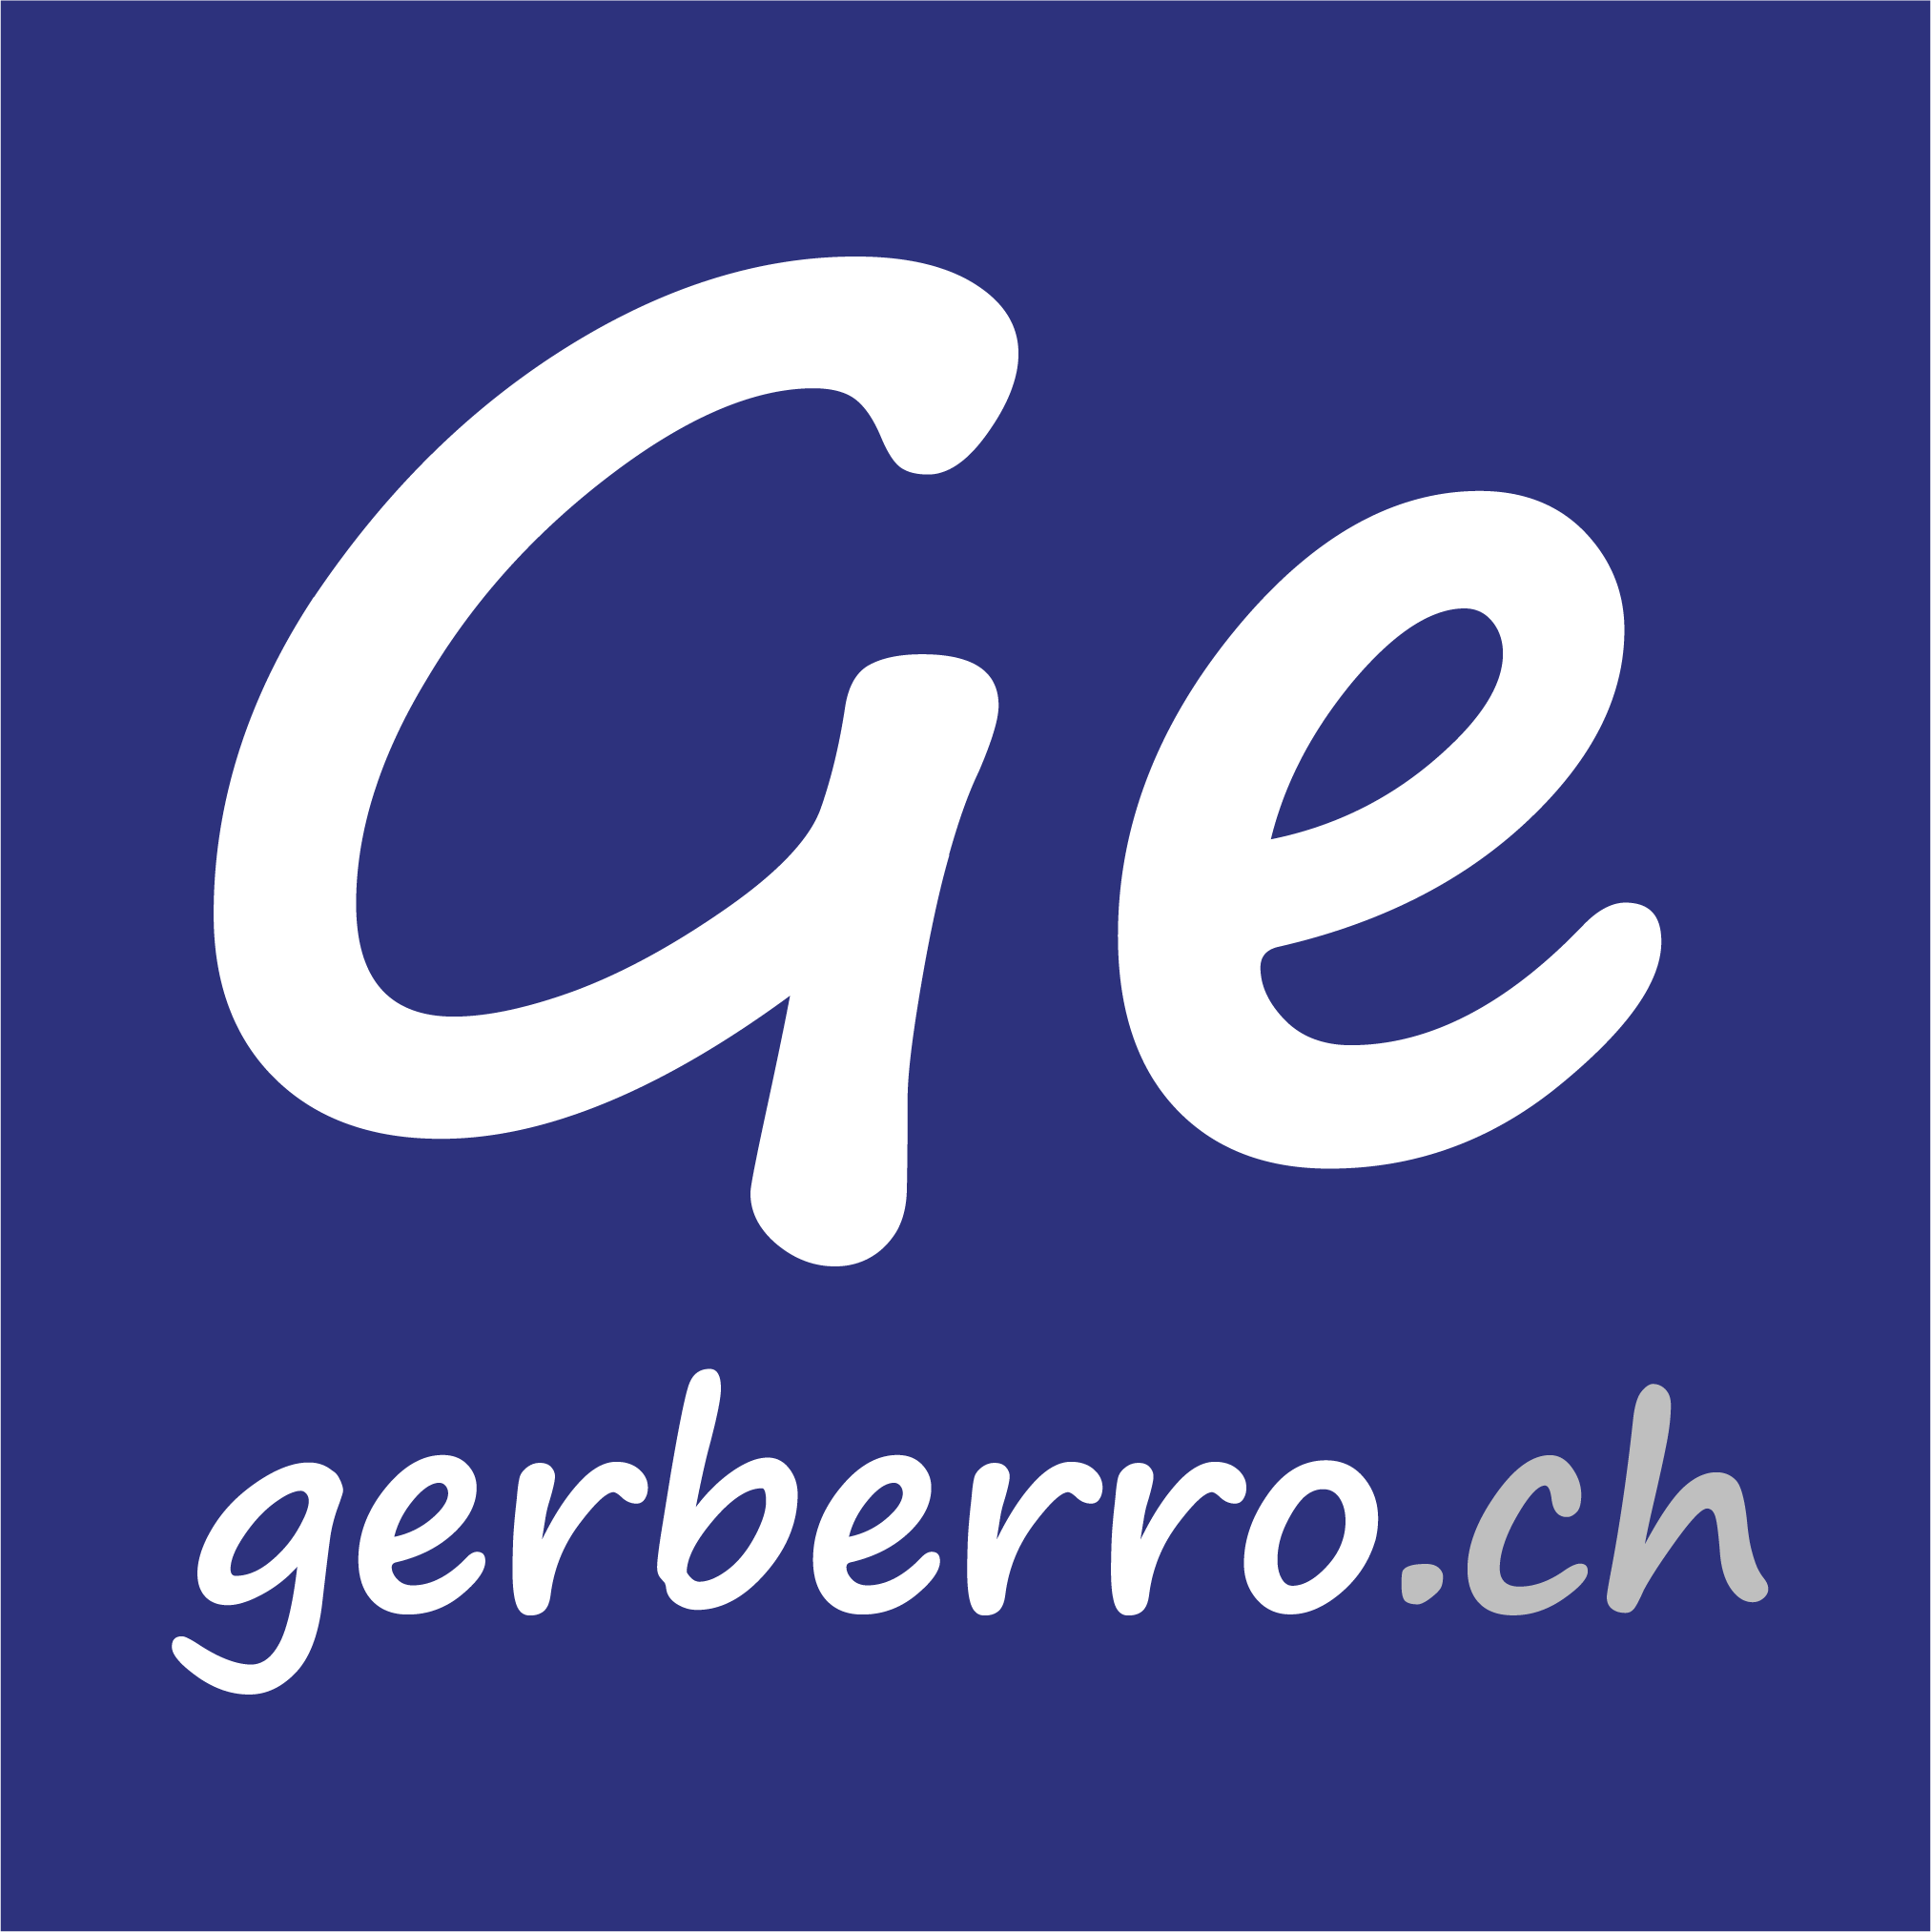 gerberro.ch